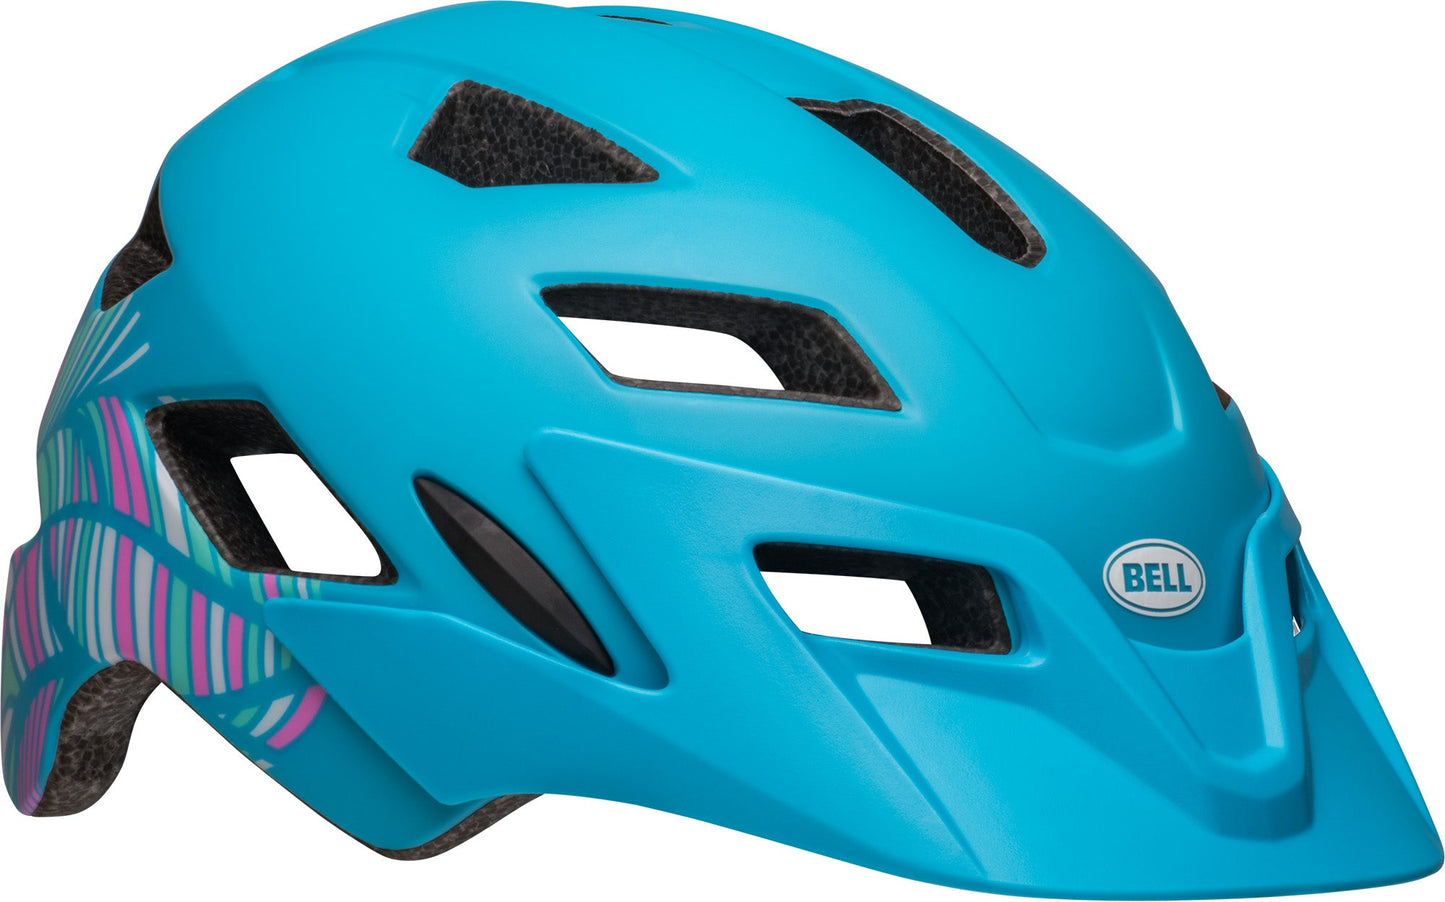 Bell Sidetrack 2021 helmet